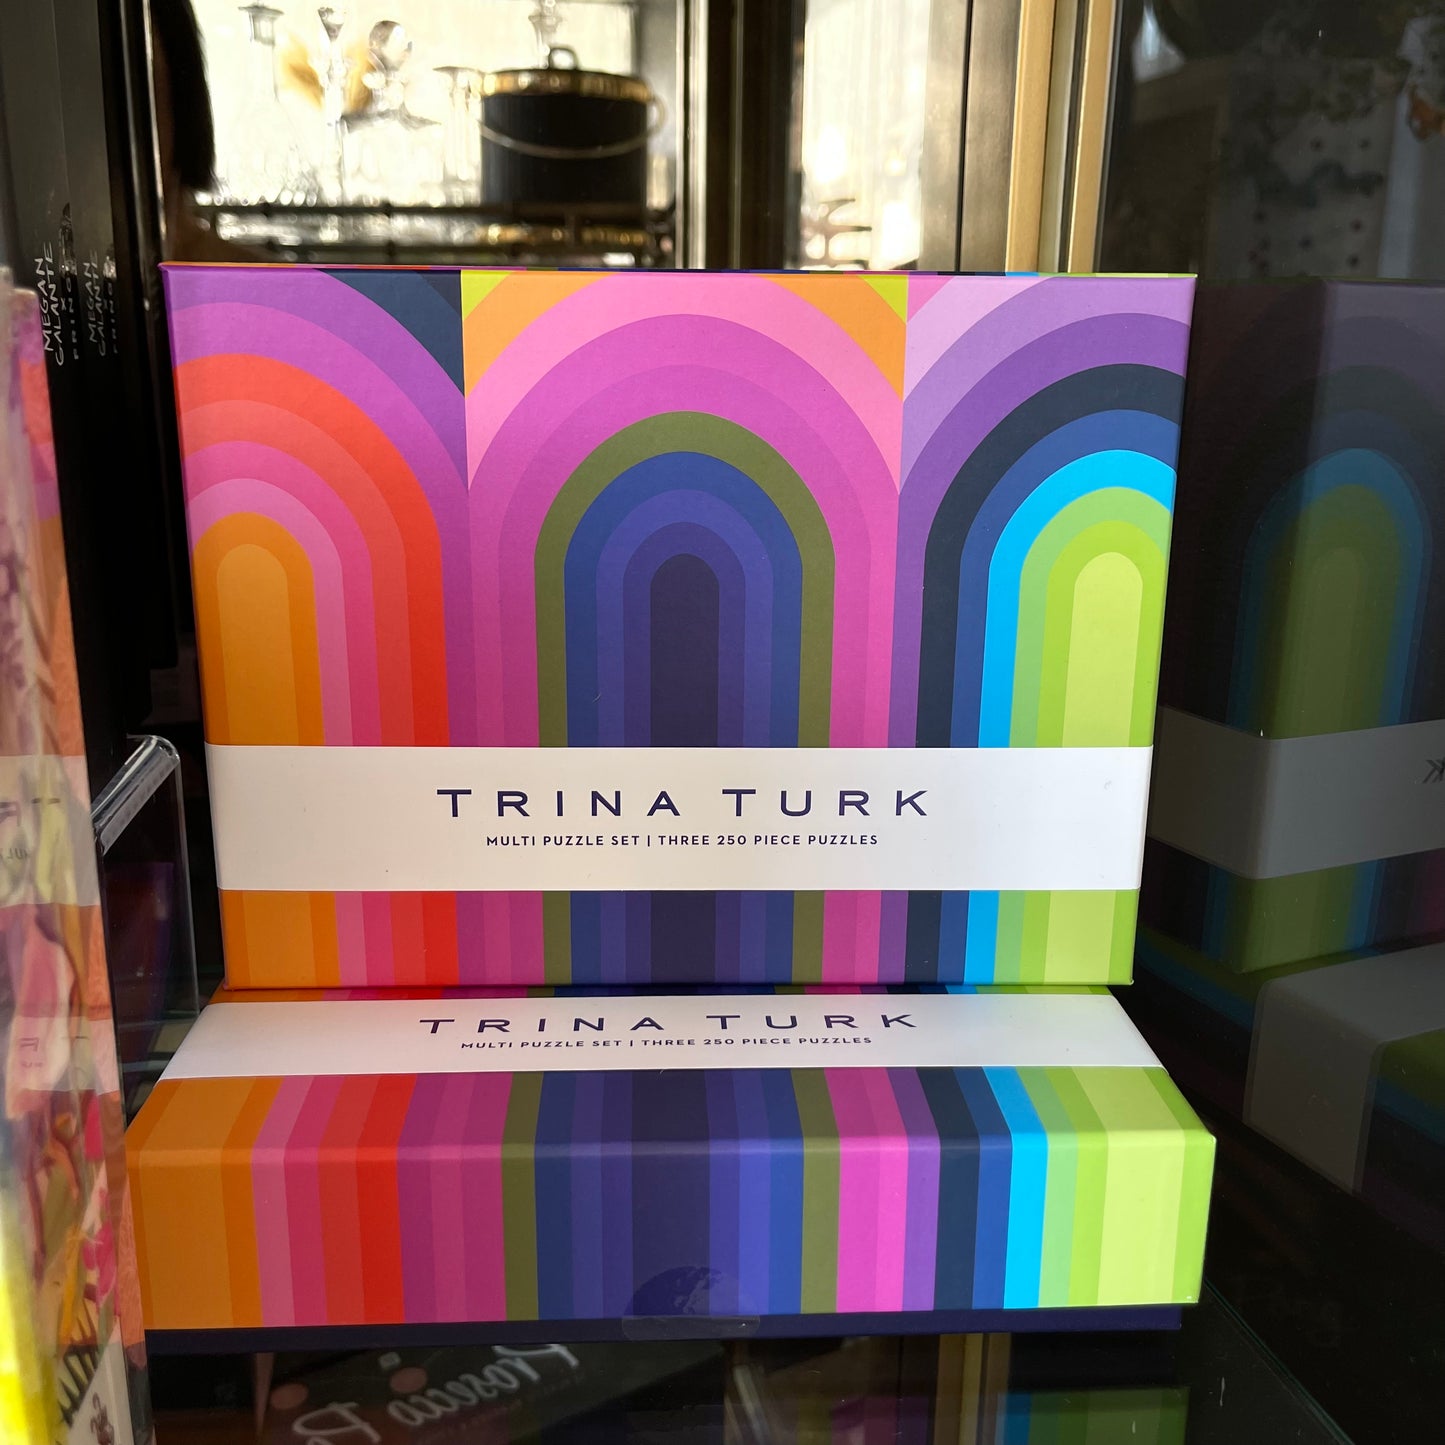 Trina Turk Multi Puzzle Set 250 Pieces